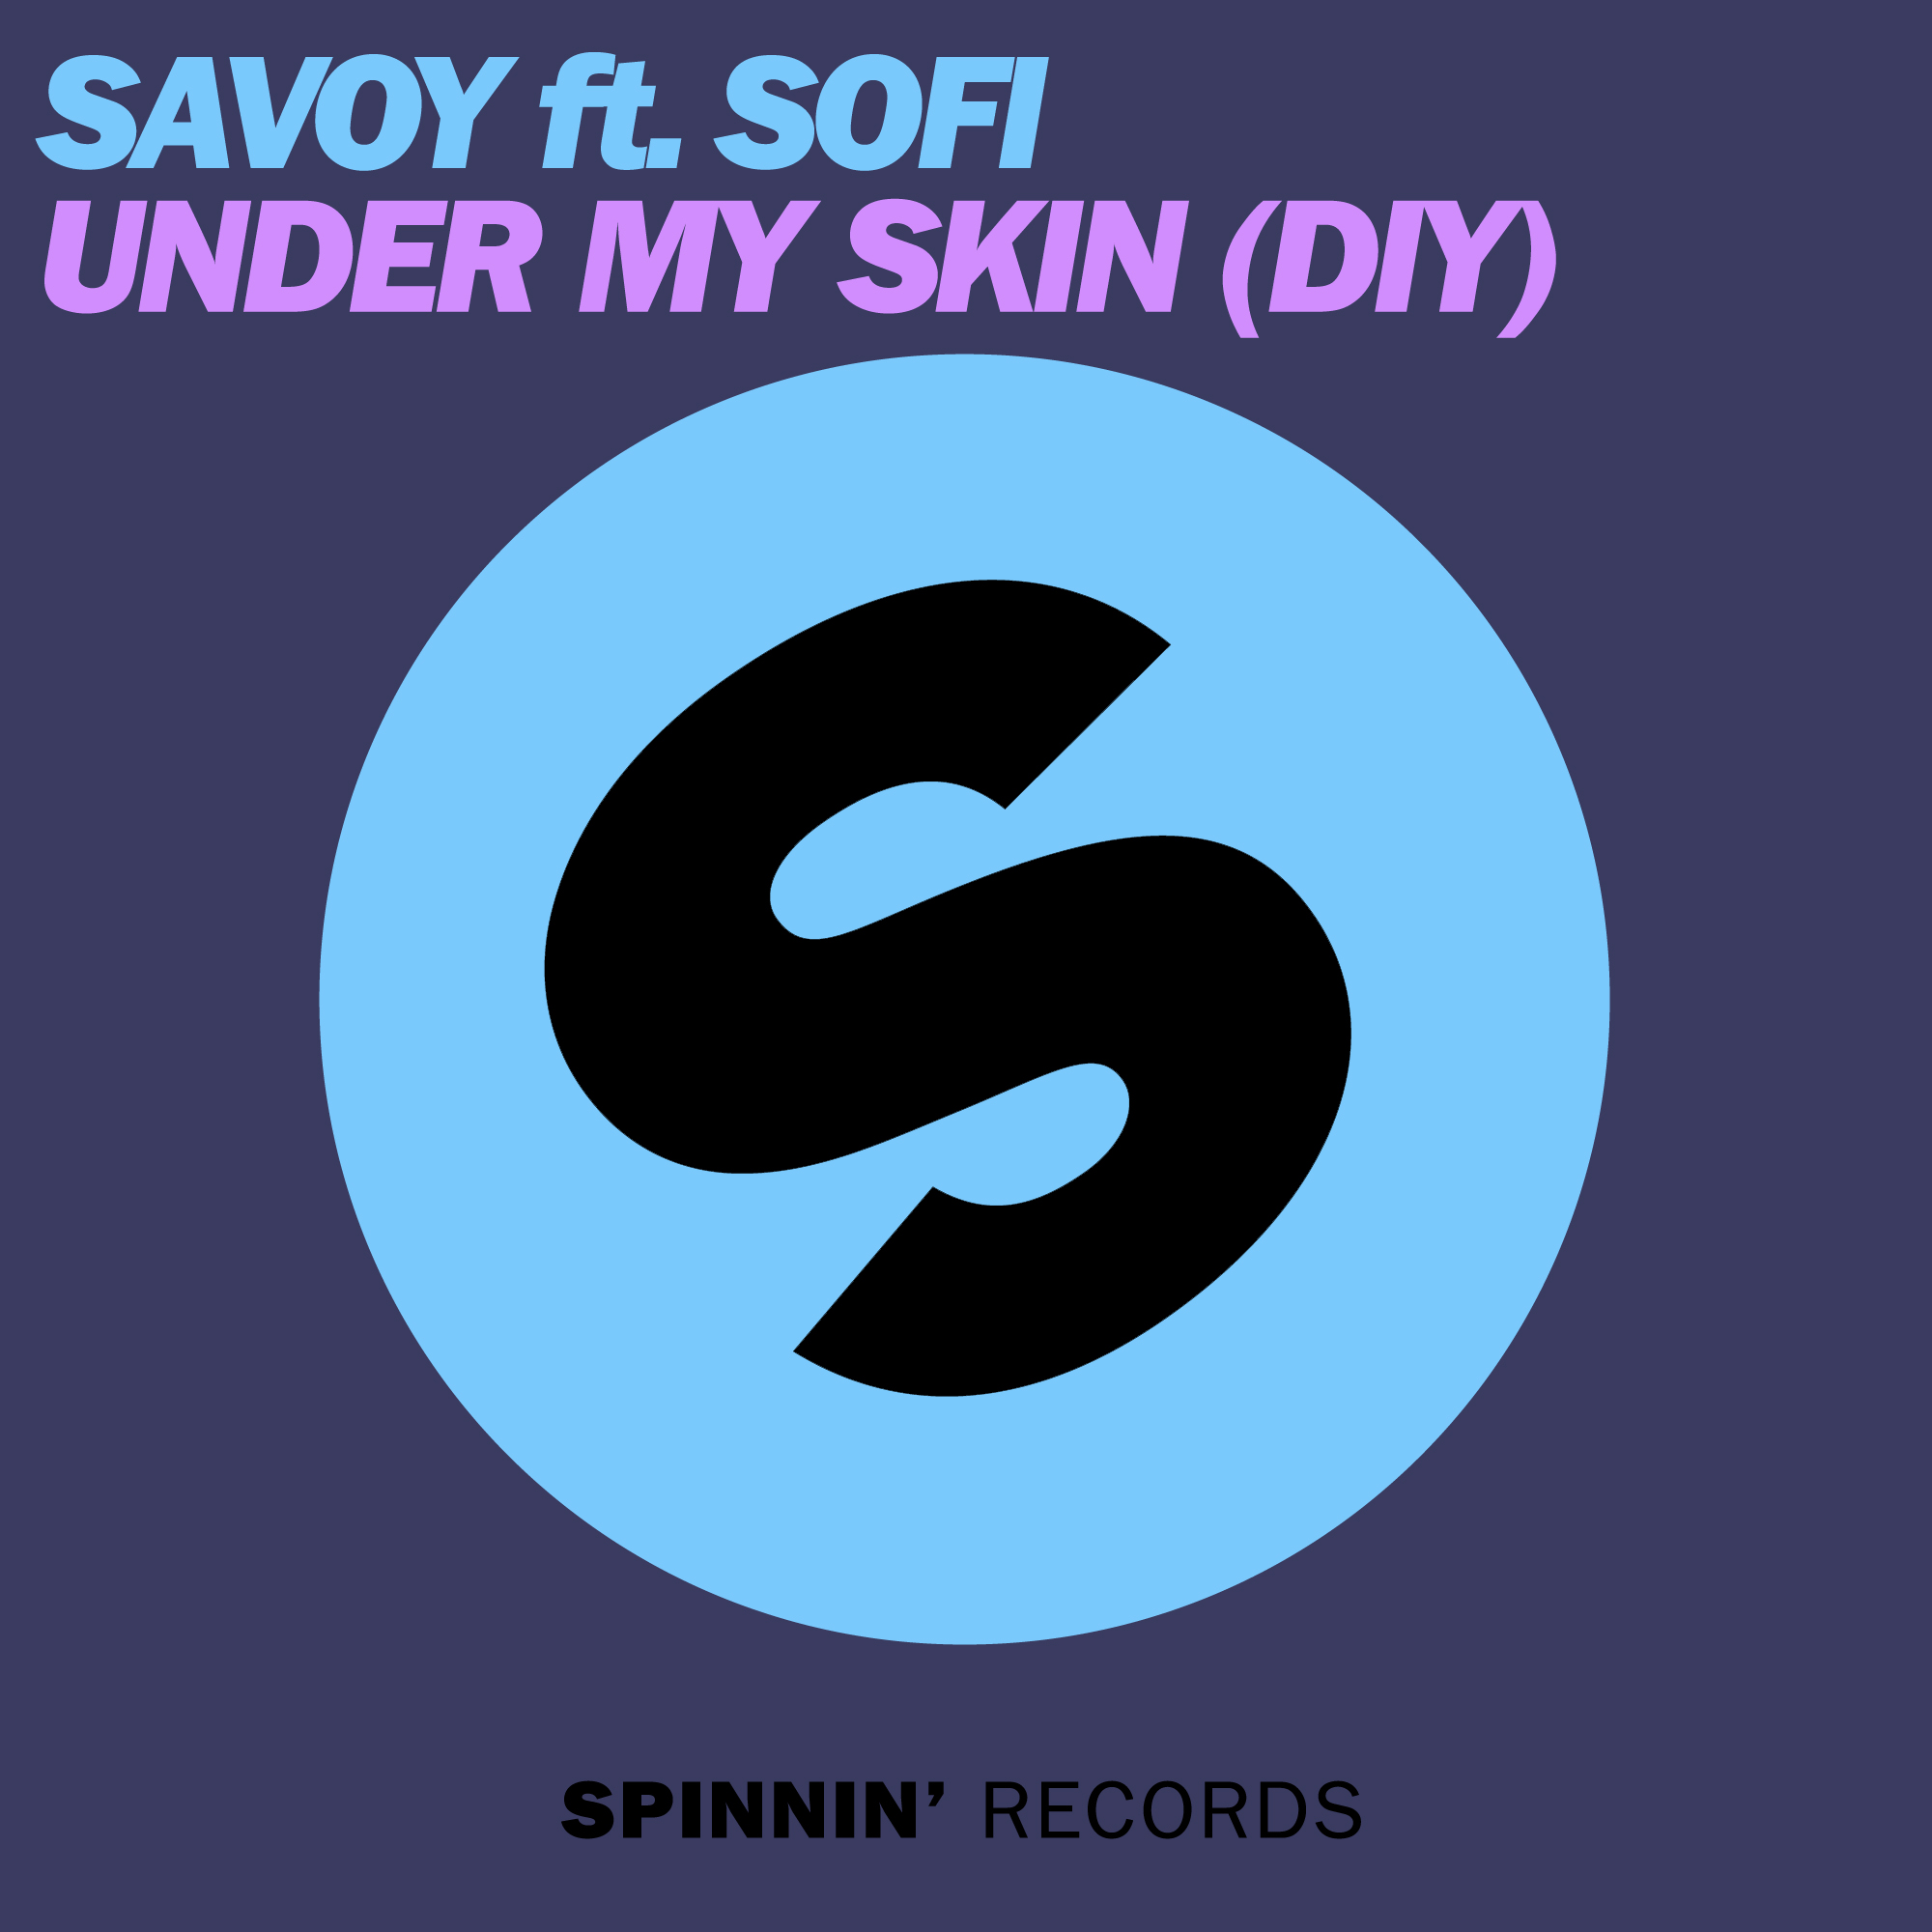 SAVOY Ft. Sofi – Under My Skin (DIY) (Original Mix) (Dubstep): OUT NOW!